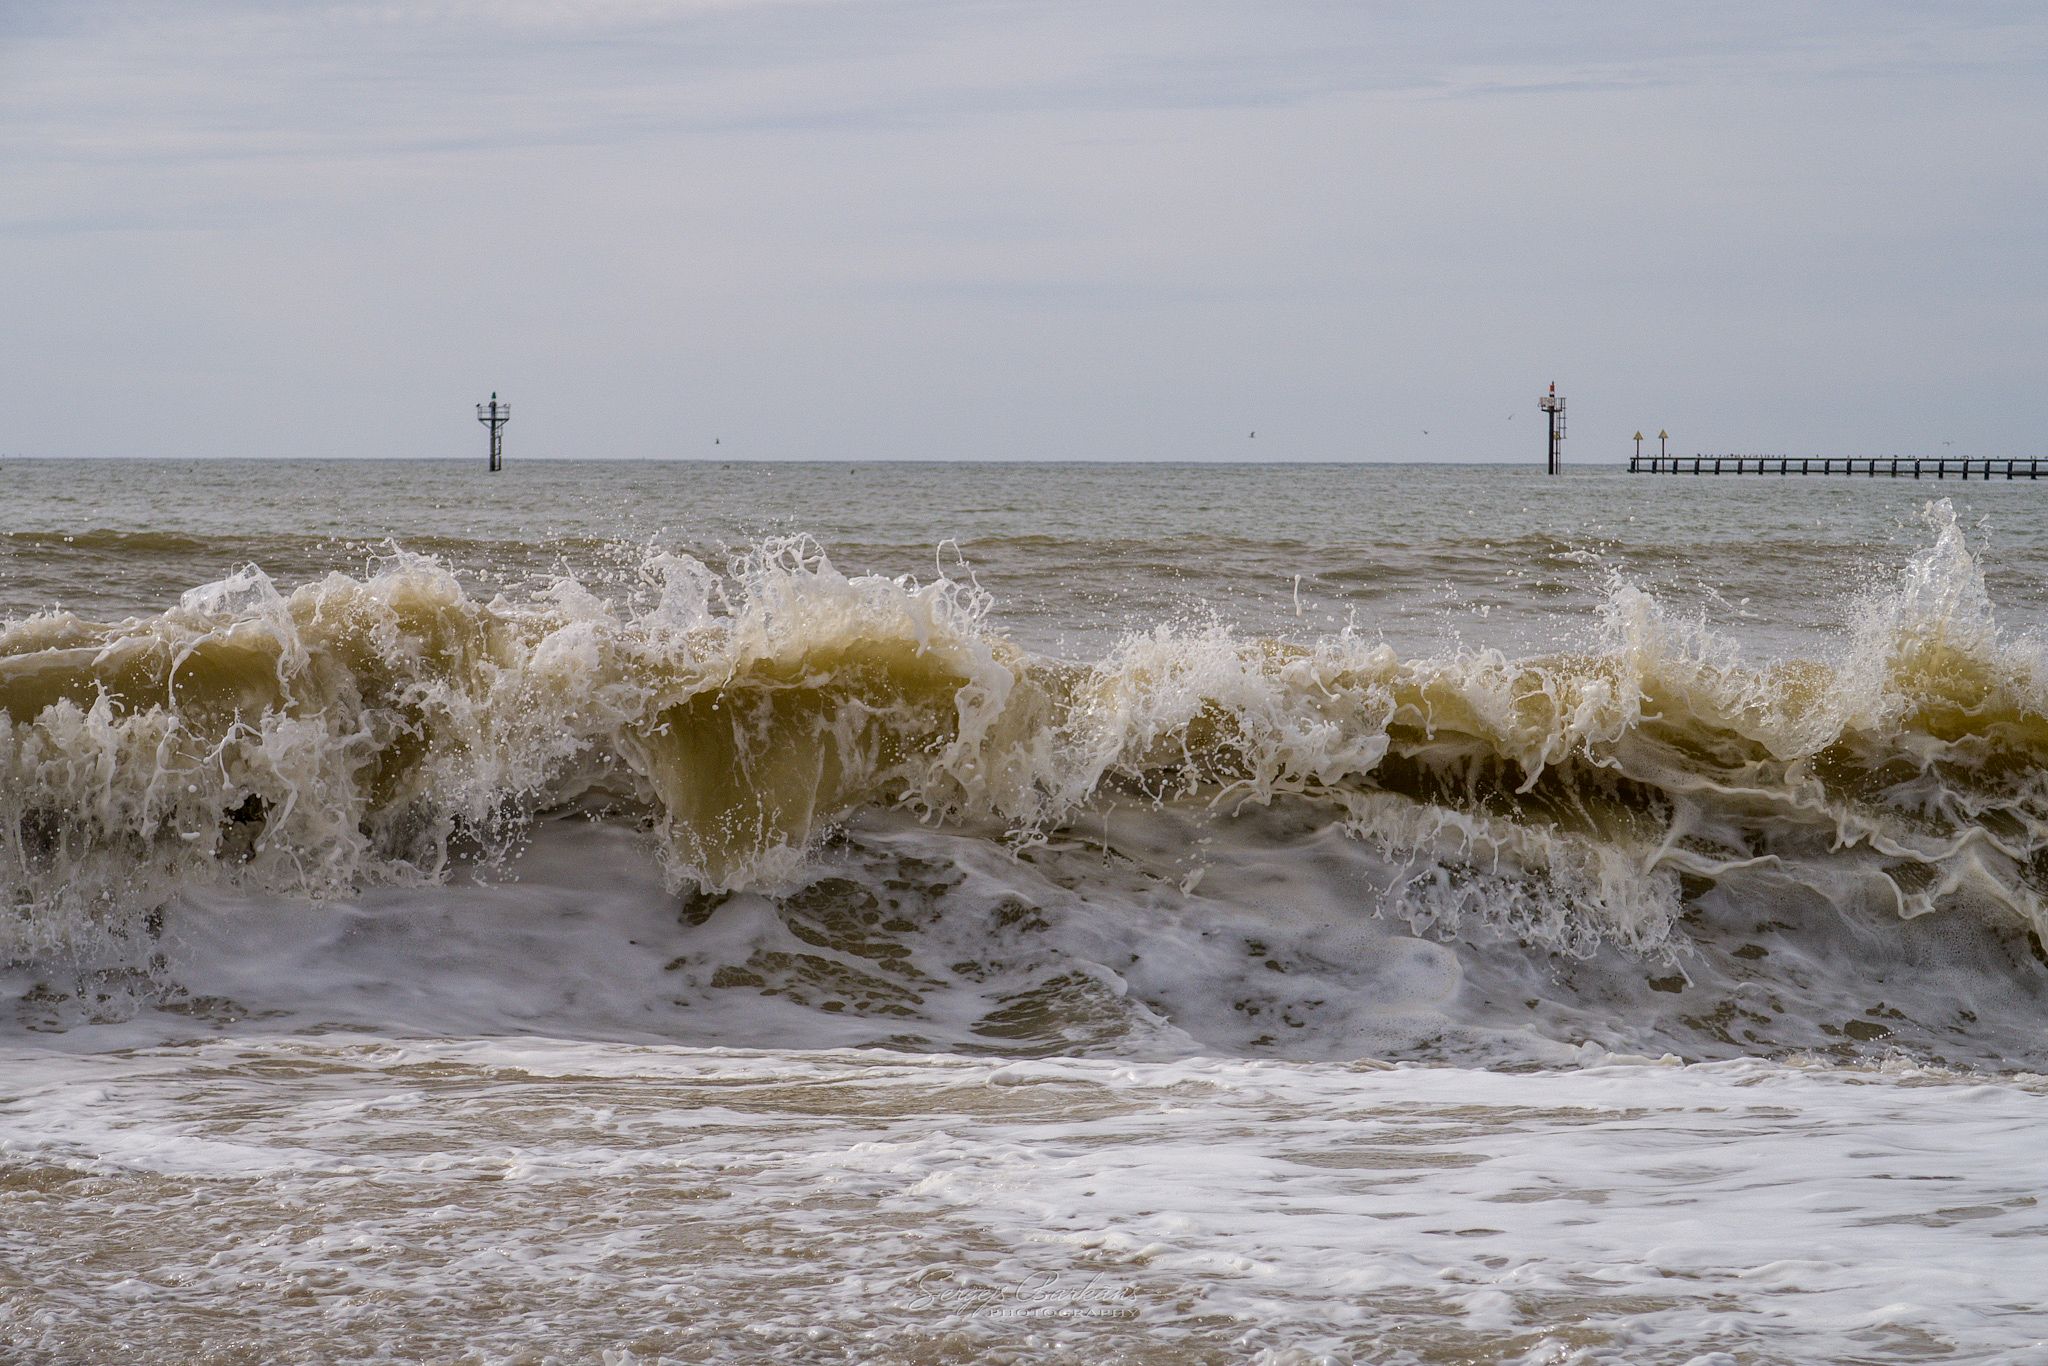 #waves #storm #littlehampton #westsussex #england #uk #nature #water #waterscape #coast #englishchannel #, Sergejs Barkans